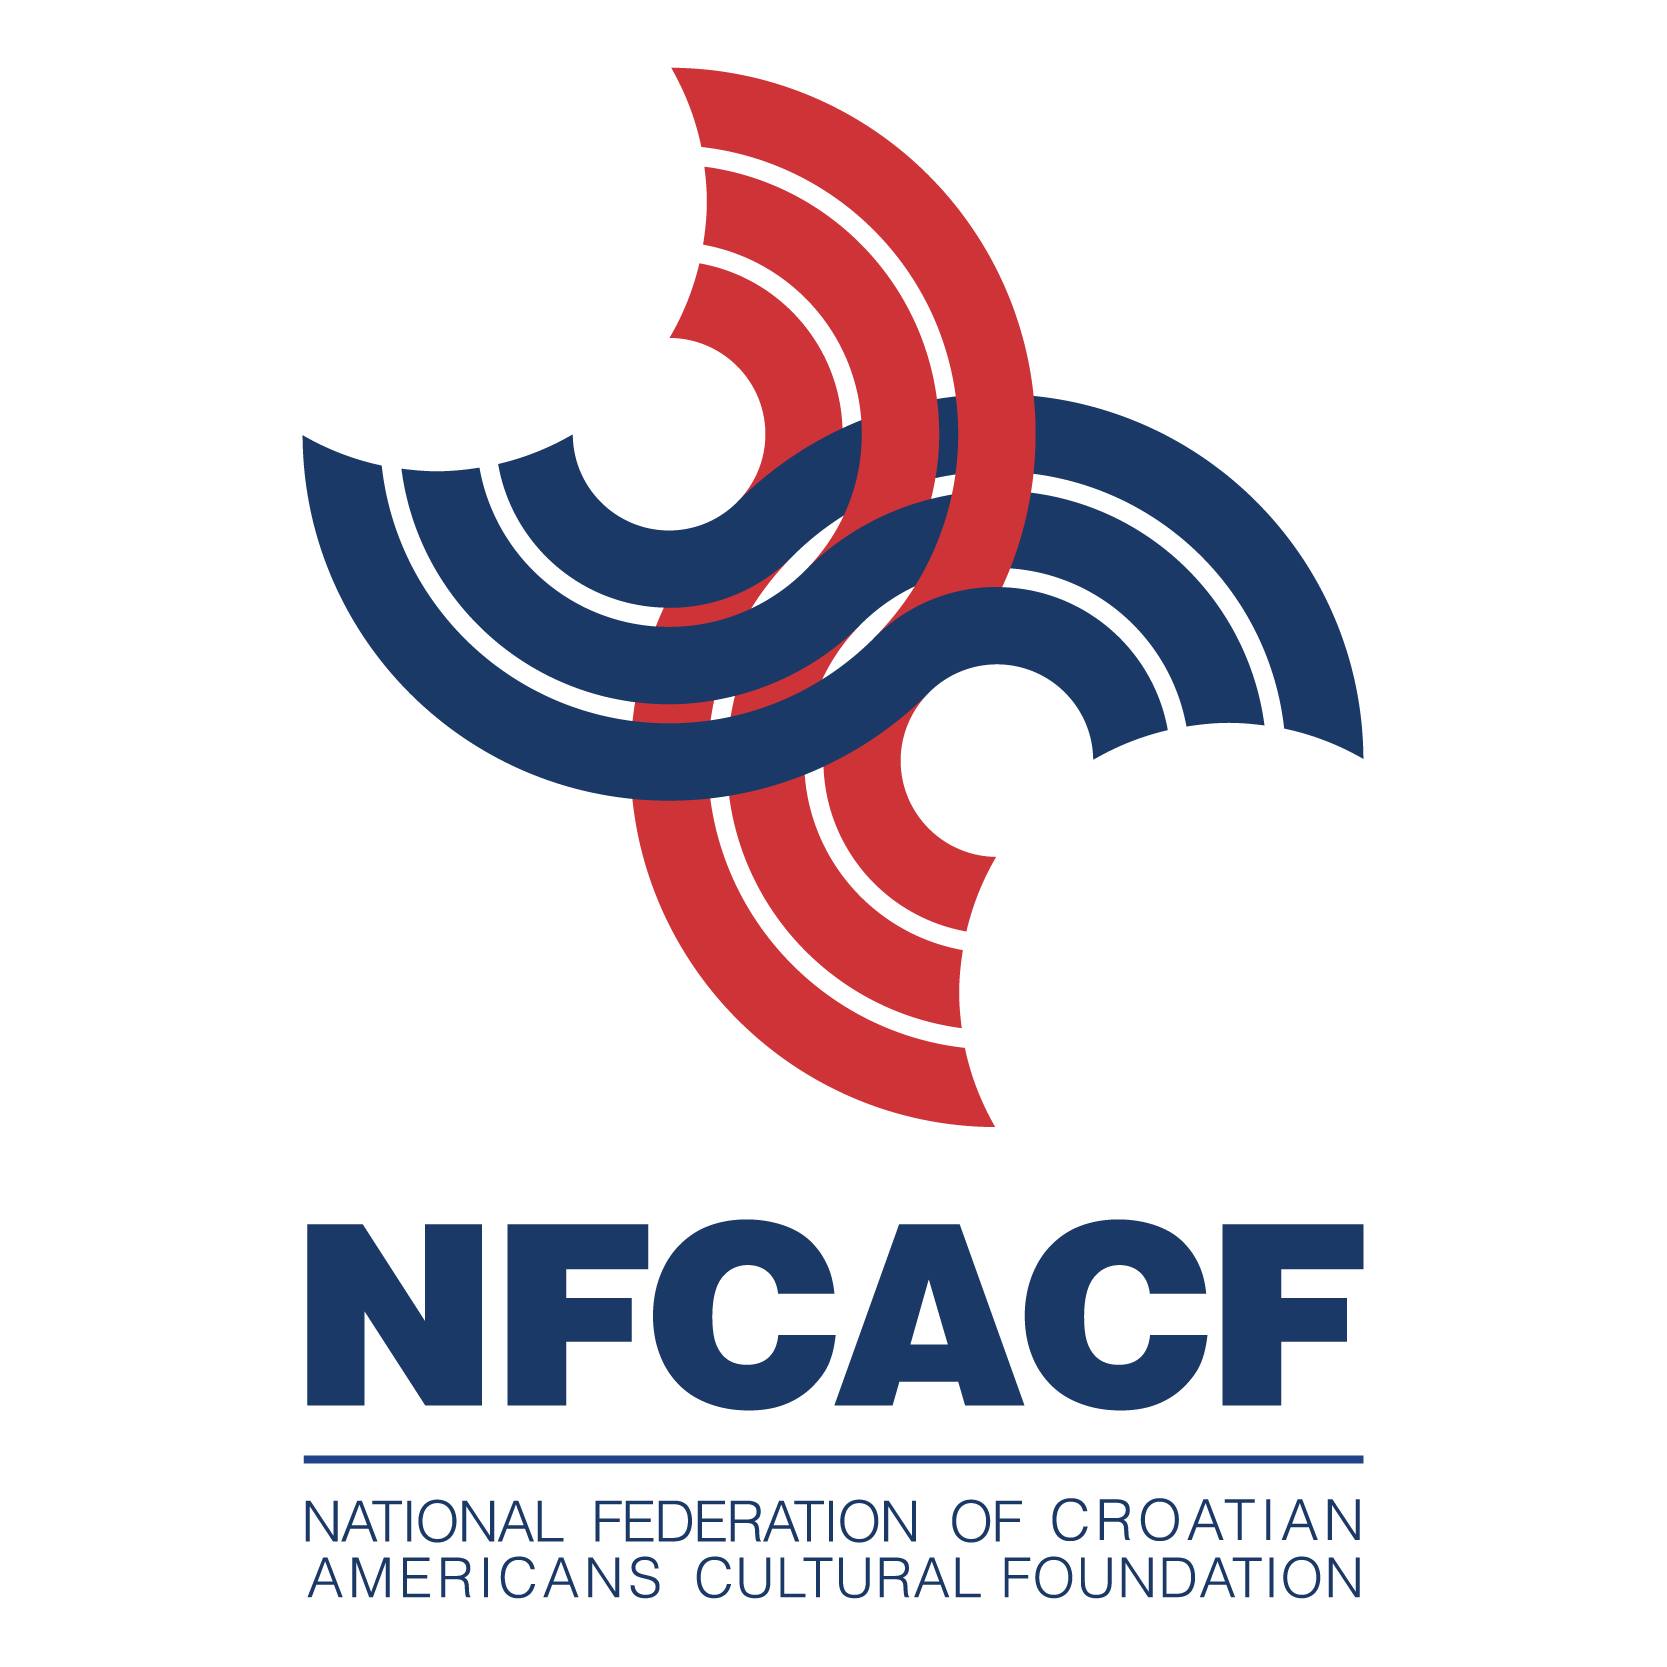 National Federation of Croatian Americans Cultural Foundation - Croatian organization in Washington DC